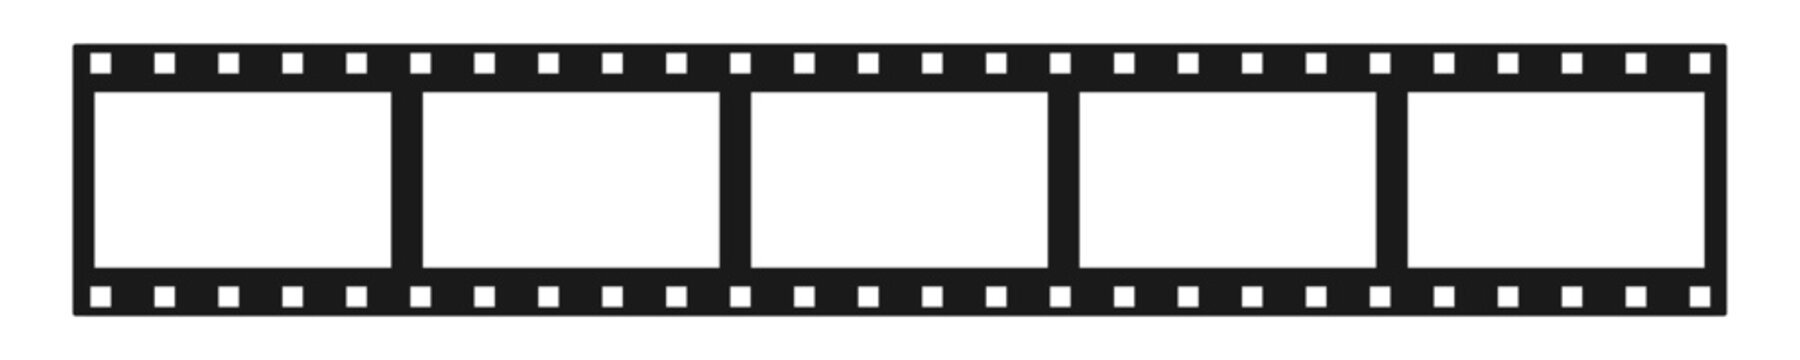 Vector illustration of blank negative film.  Retro film strip frame